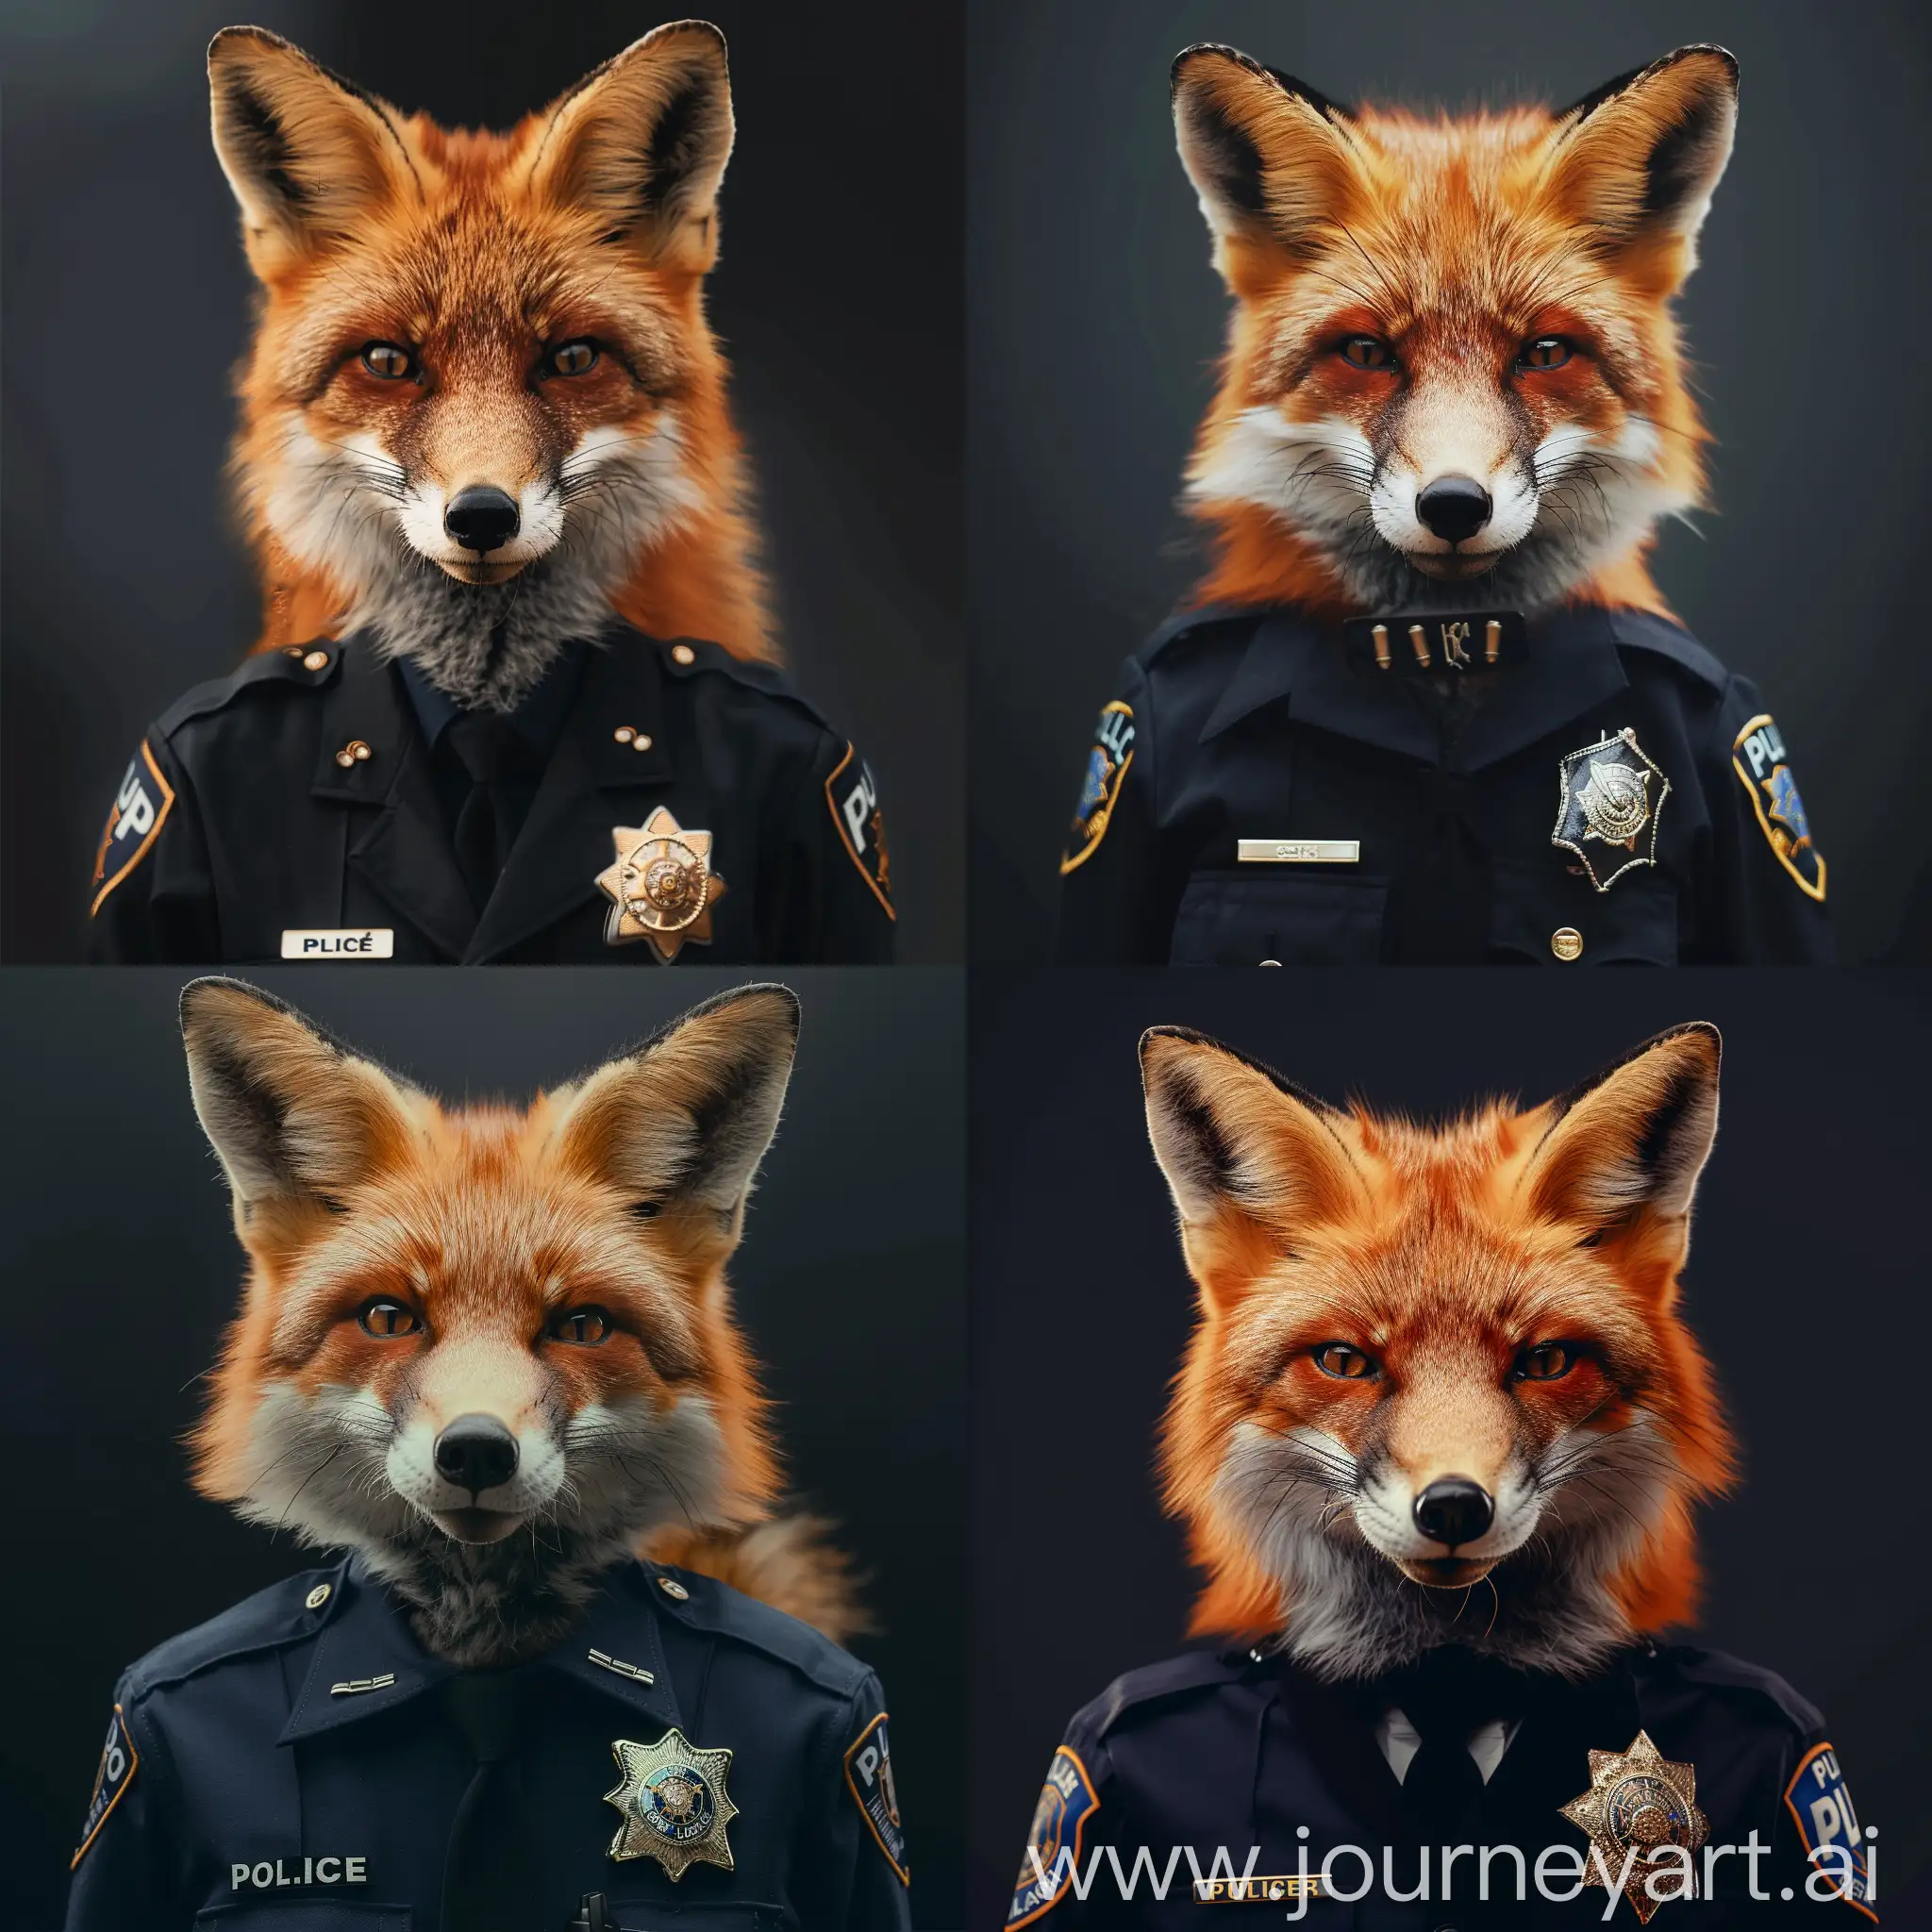 A fox wearing police uniform